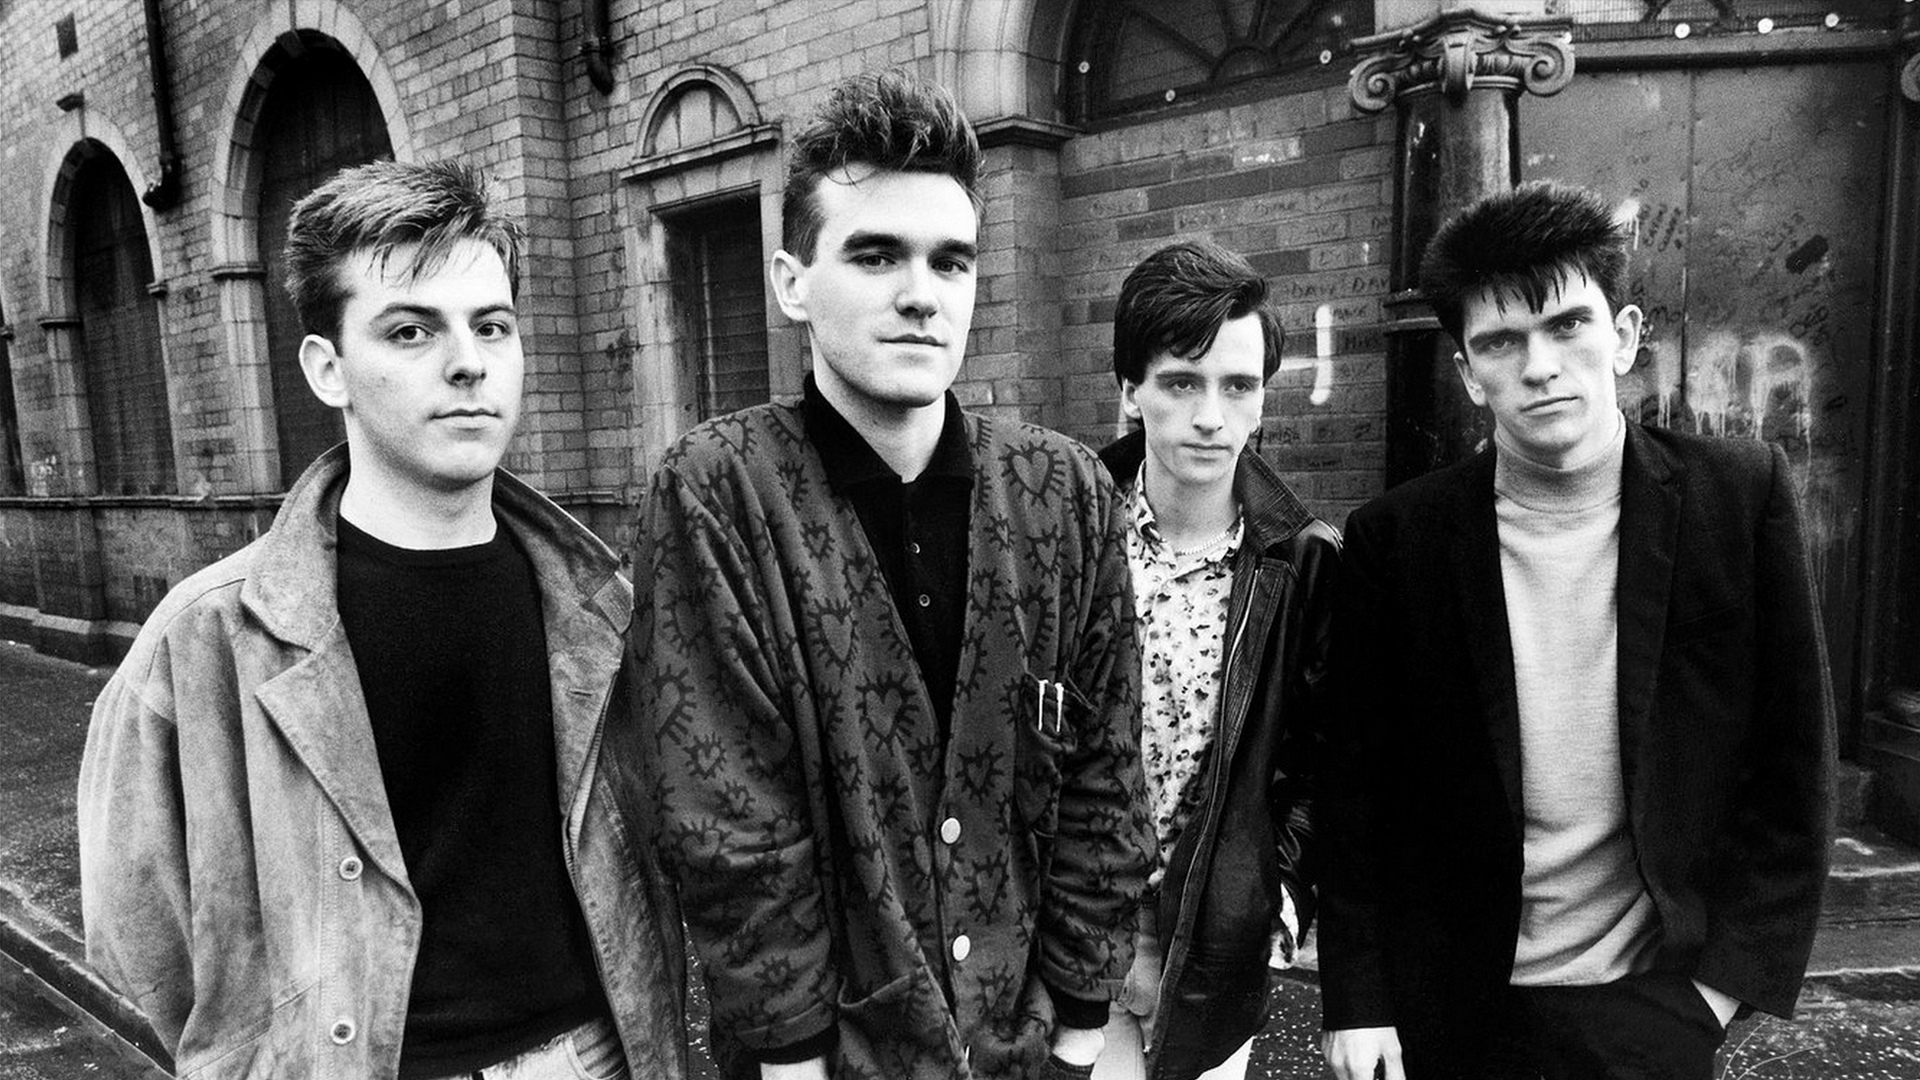 This Charming Man av The Smiths